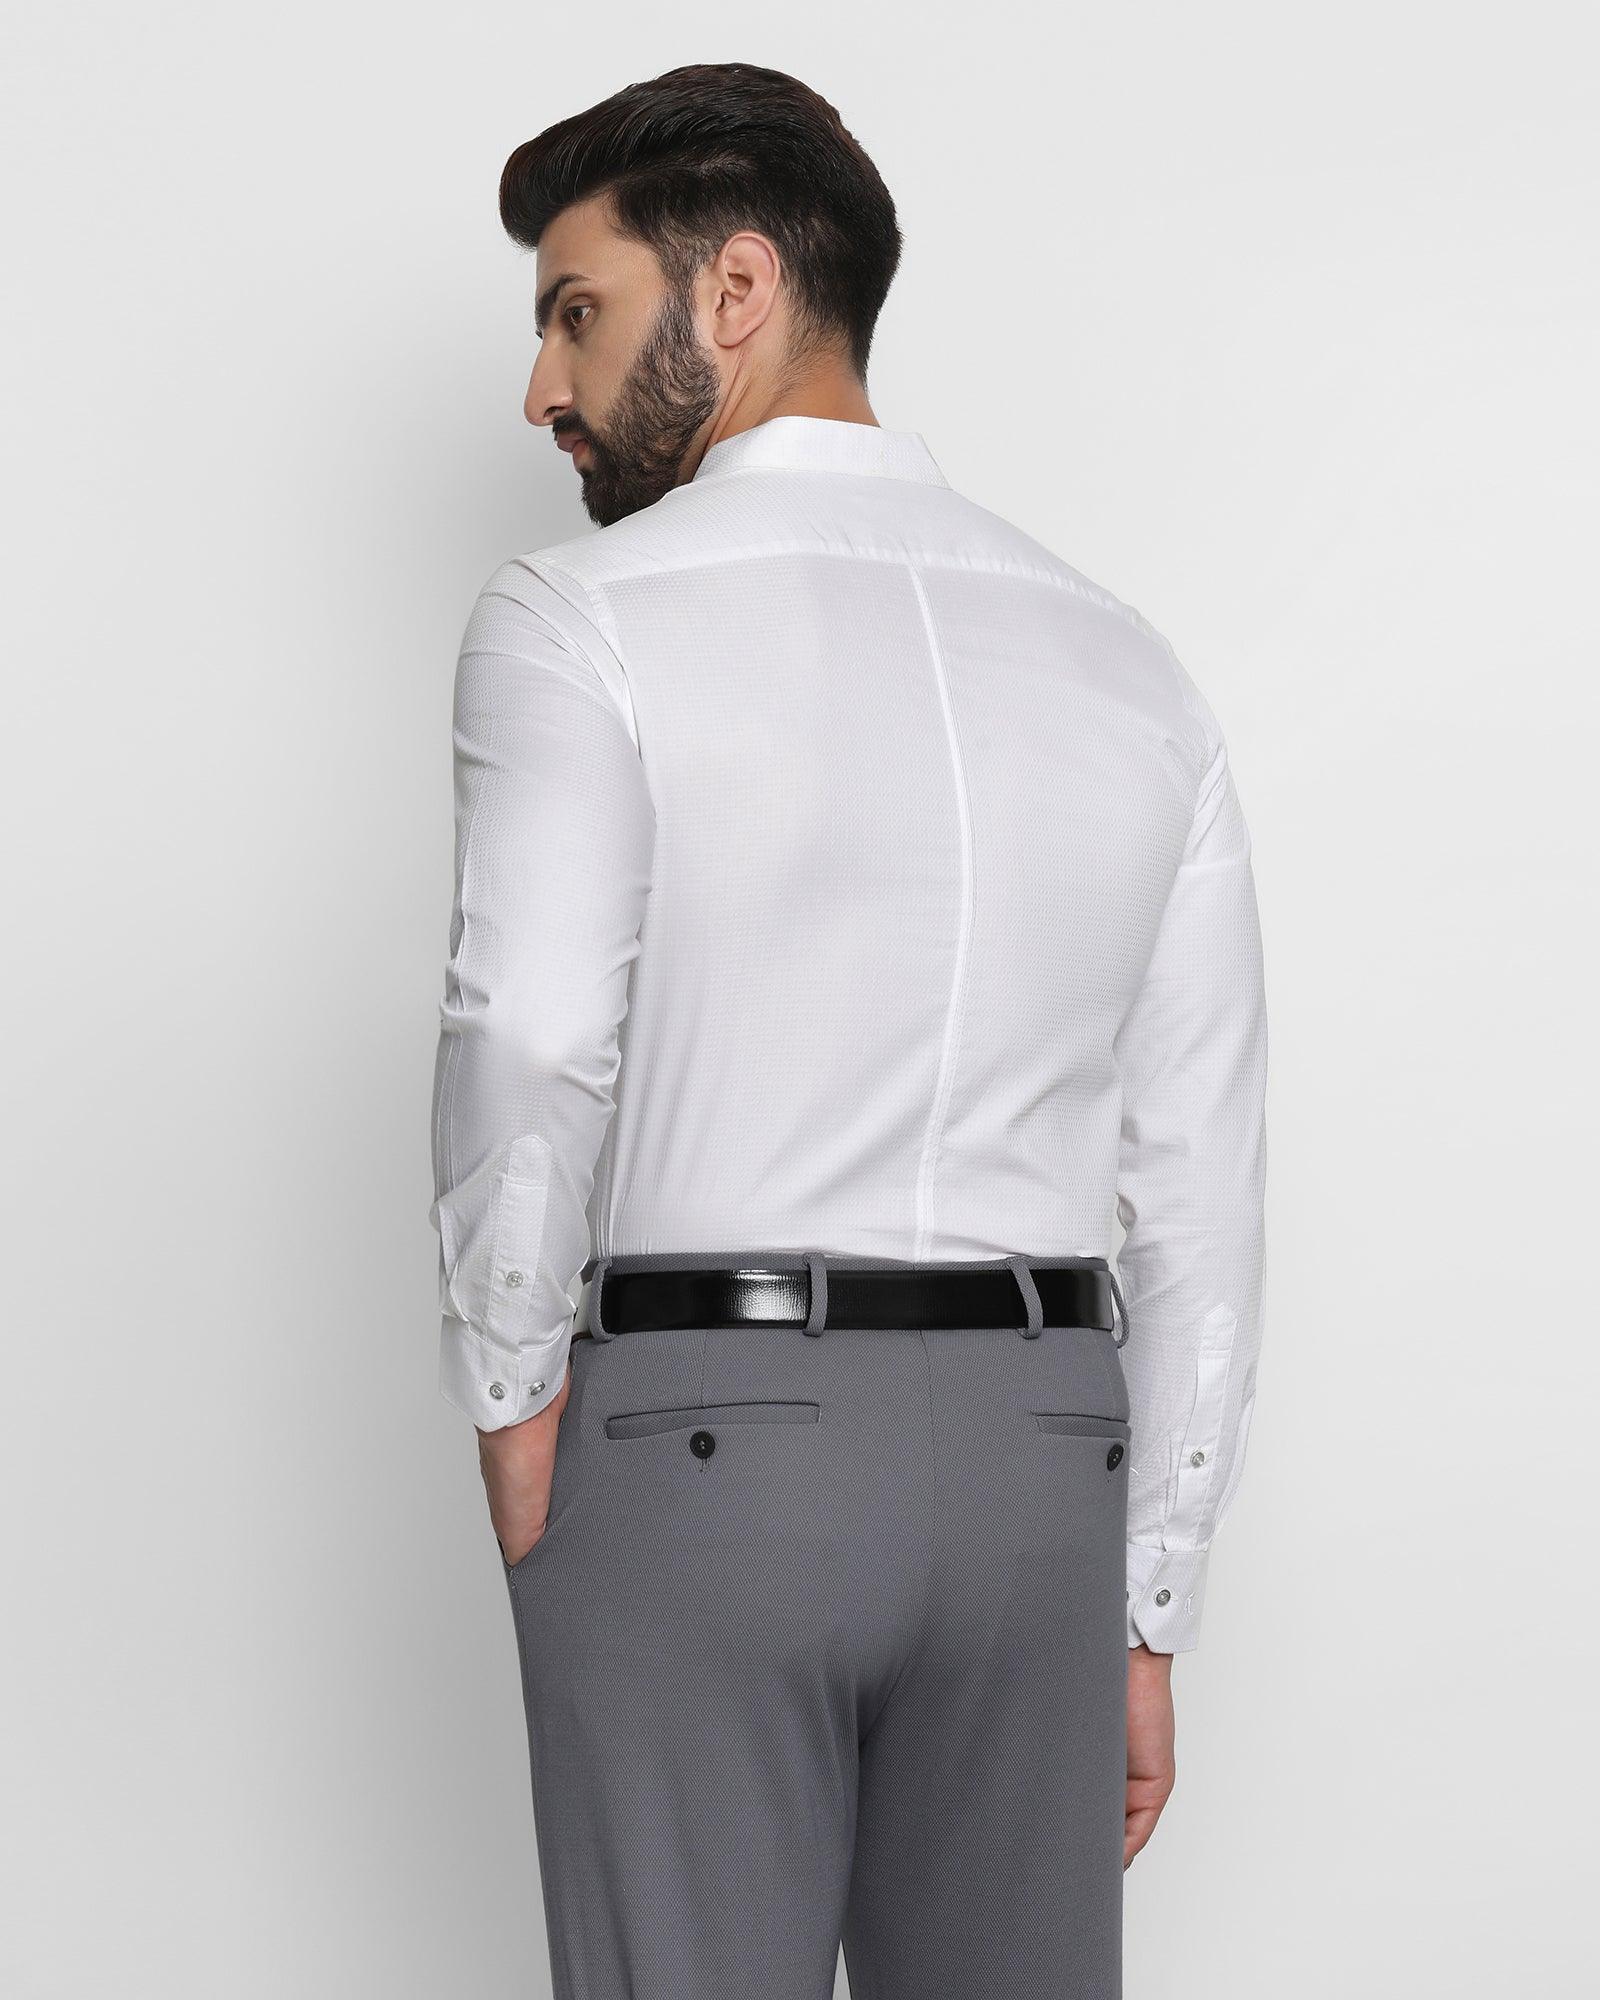 Formal White Textured Shirt - Adley